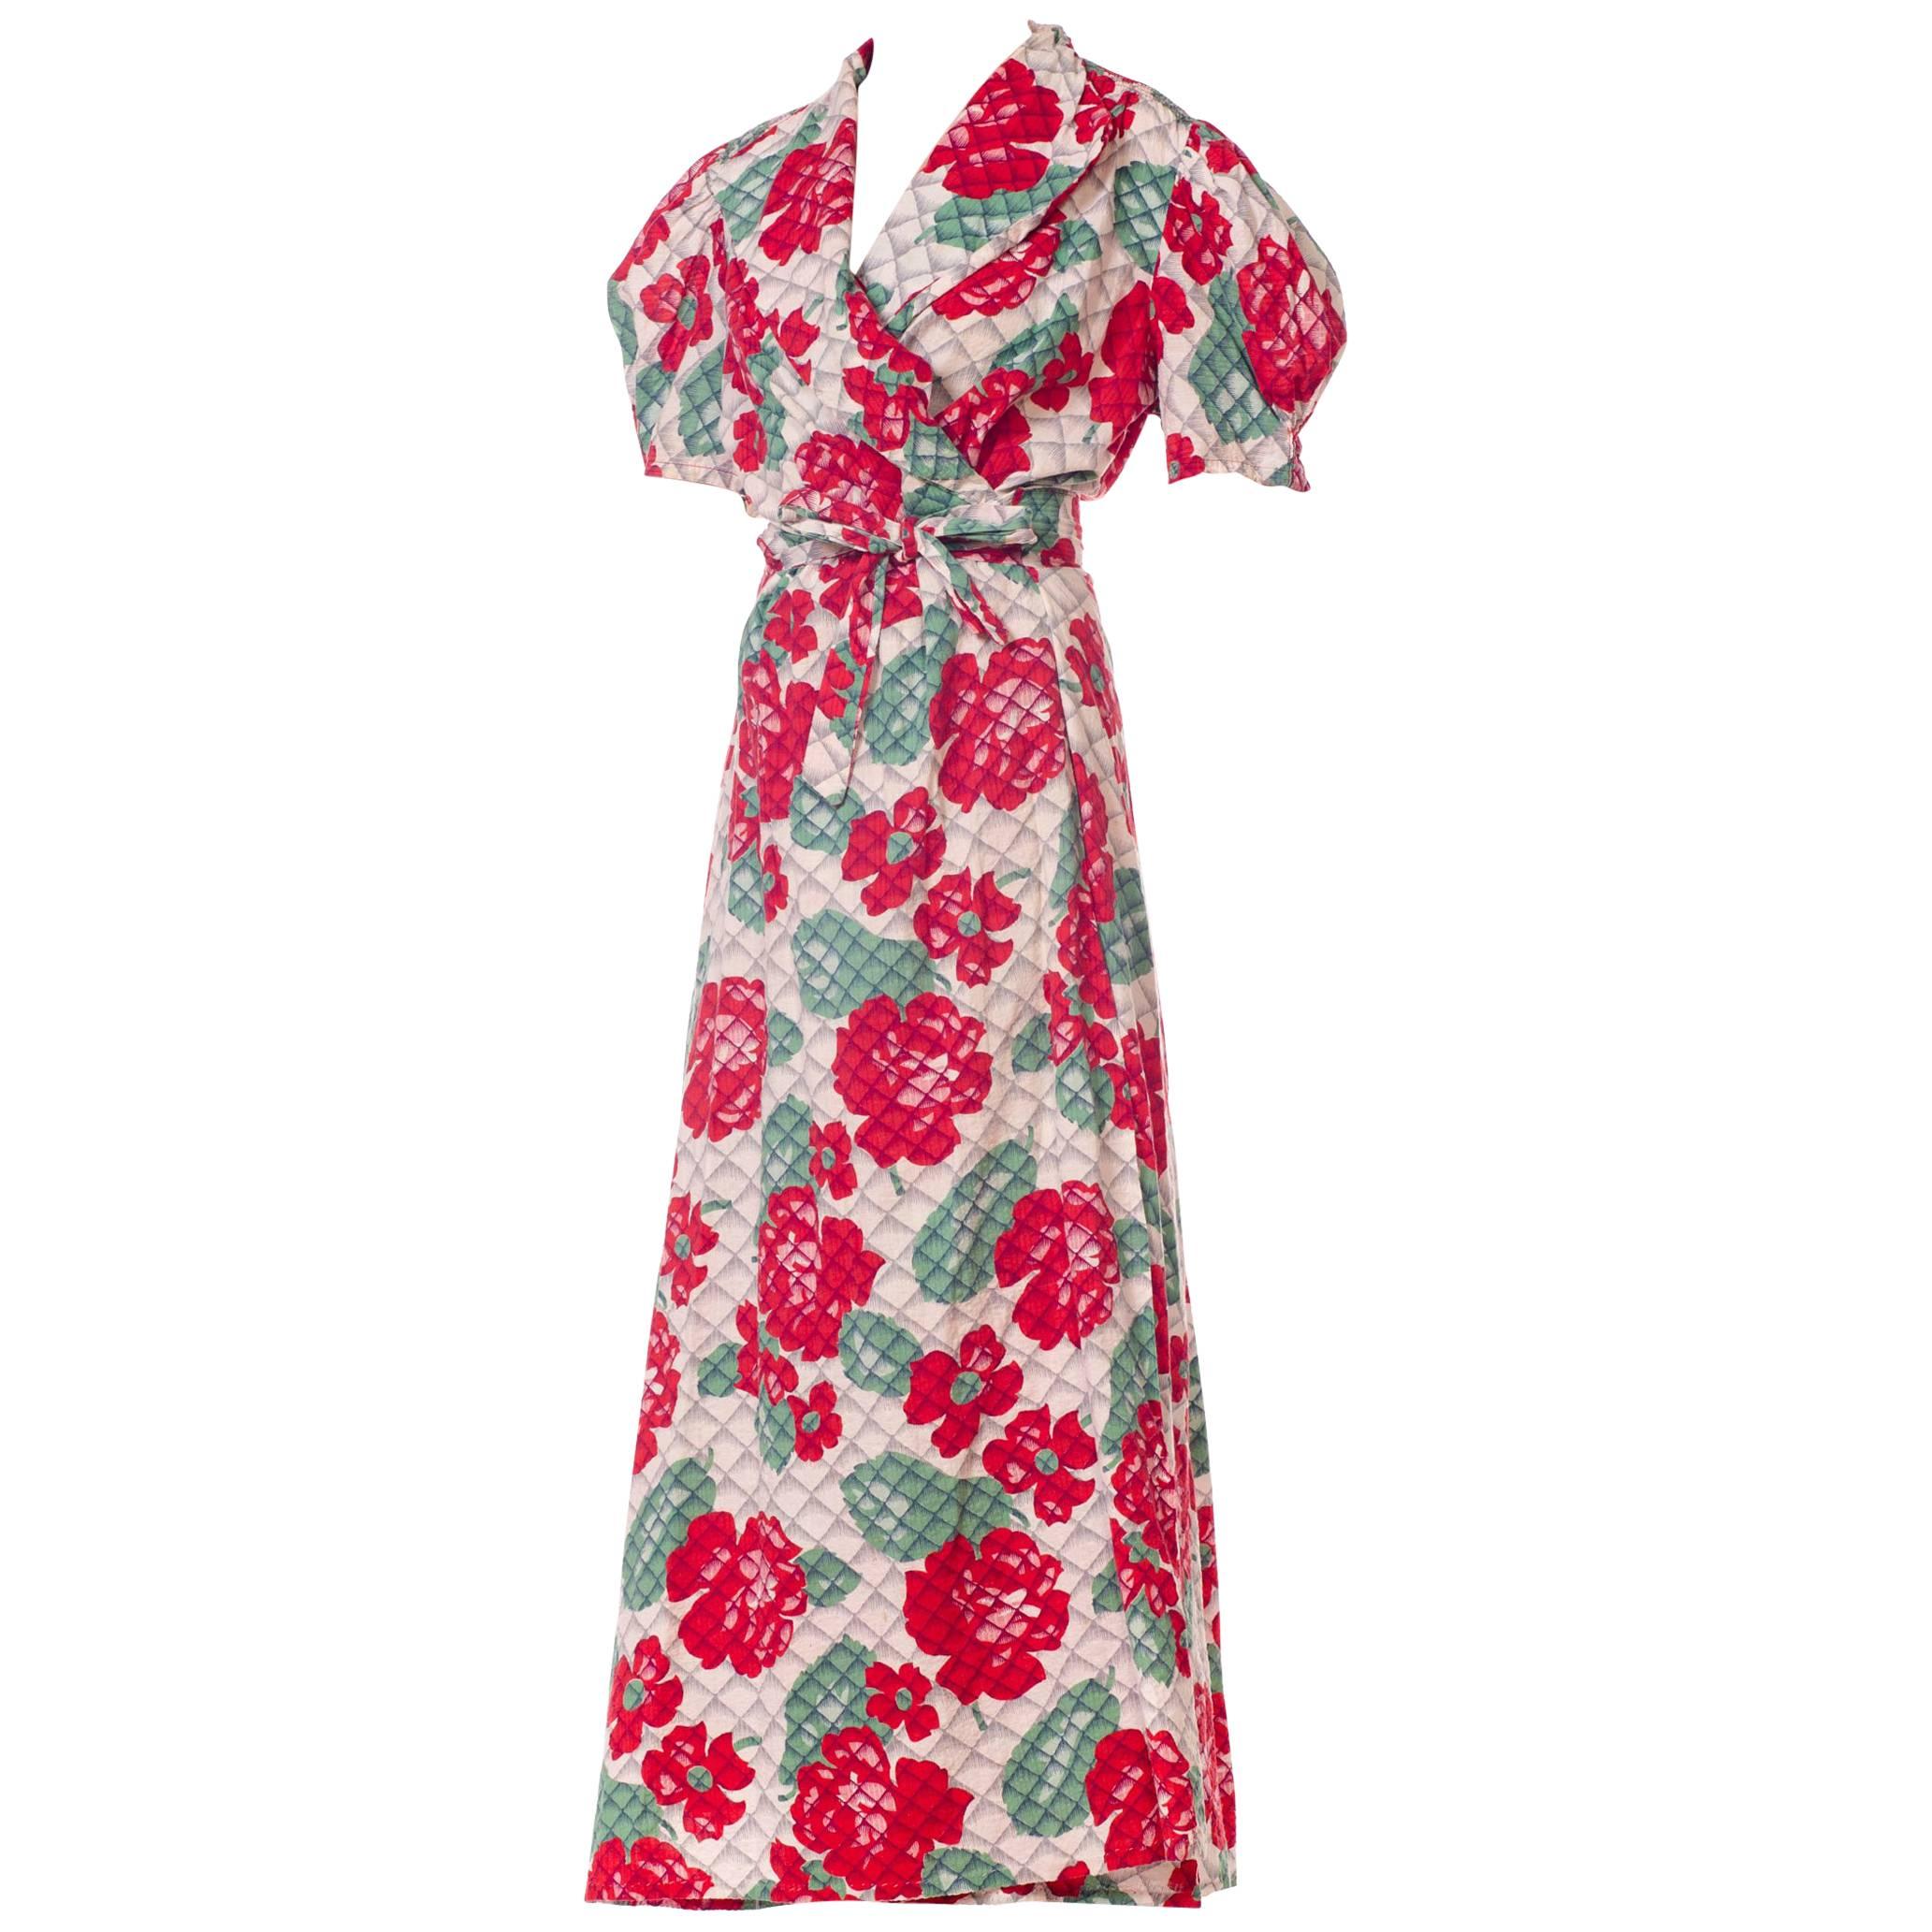 1940s Wrap Dress - 8 For Sale on 1stDibs